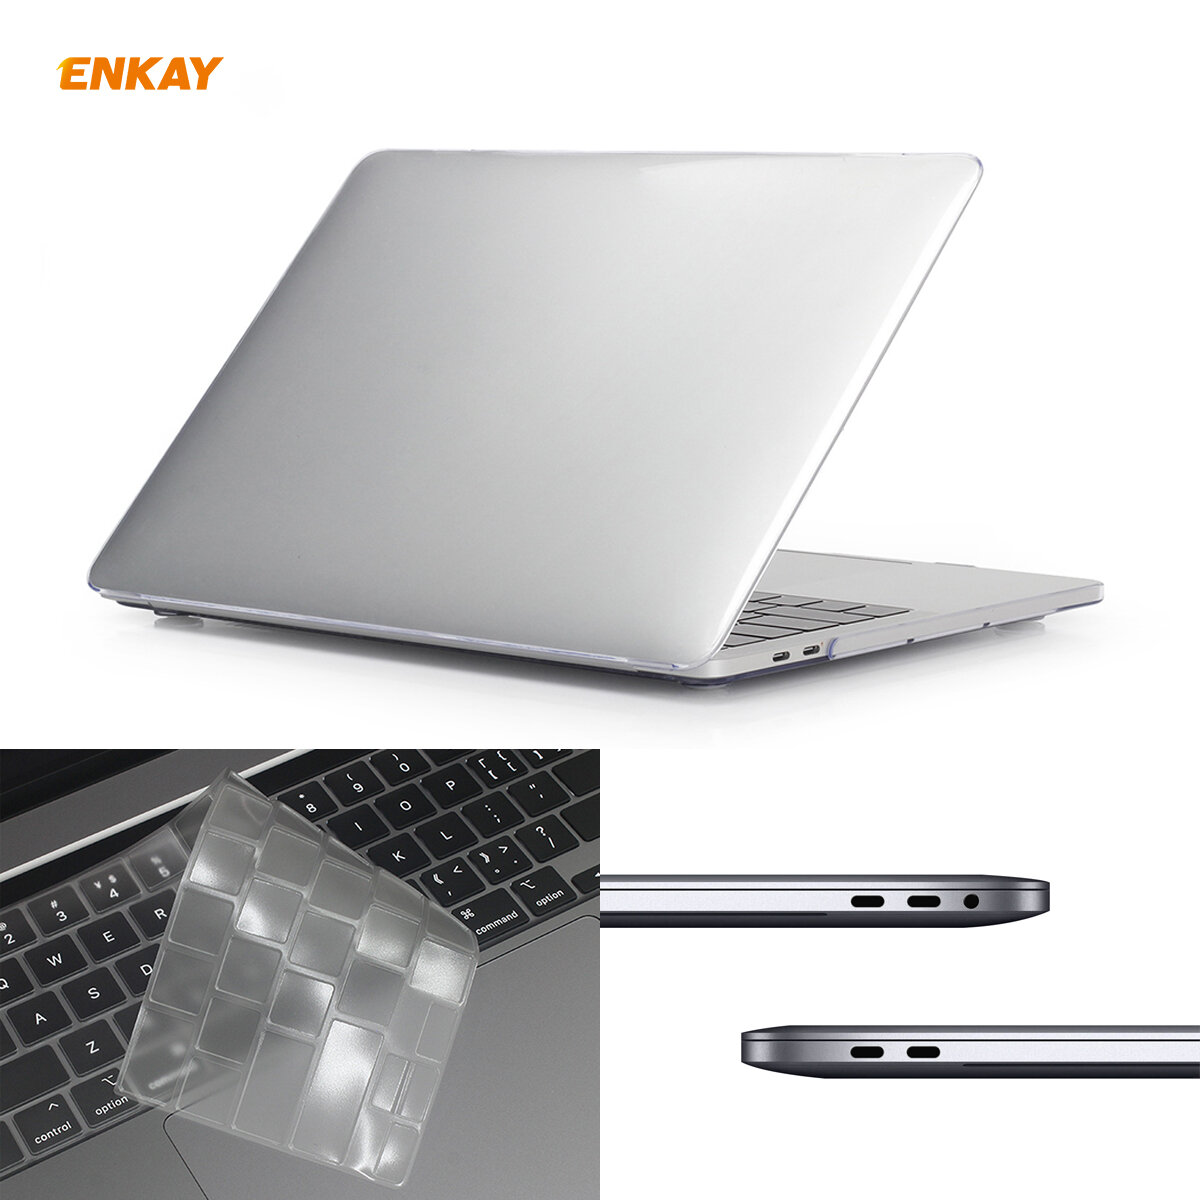 

Enkay 3-In-1 Ultra-Thin TPU Keyboard Protective Film + Full Body Case Cover + Dustproof Plug for MacBook Pro 13 inch EU